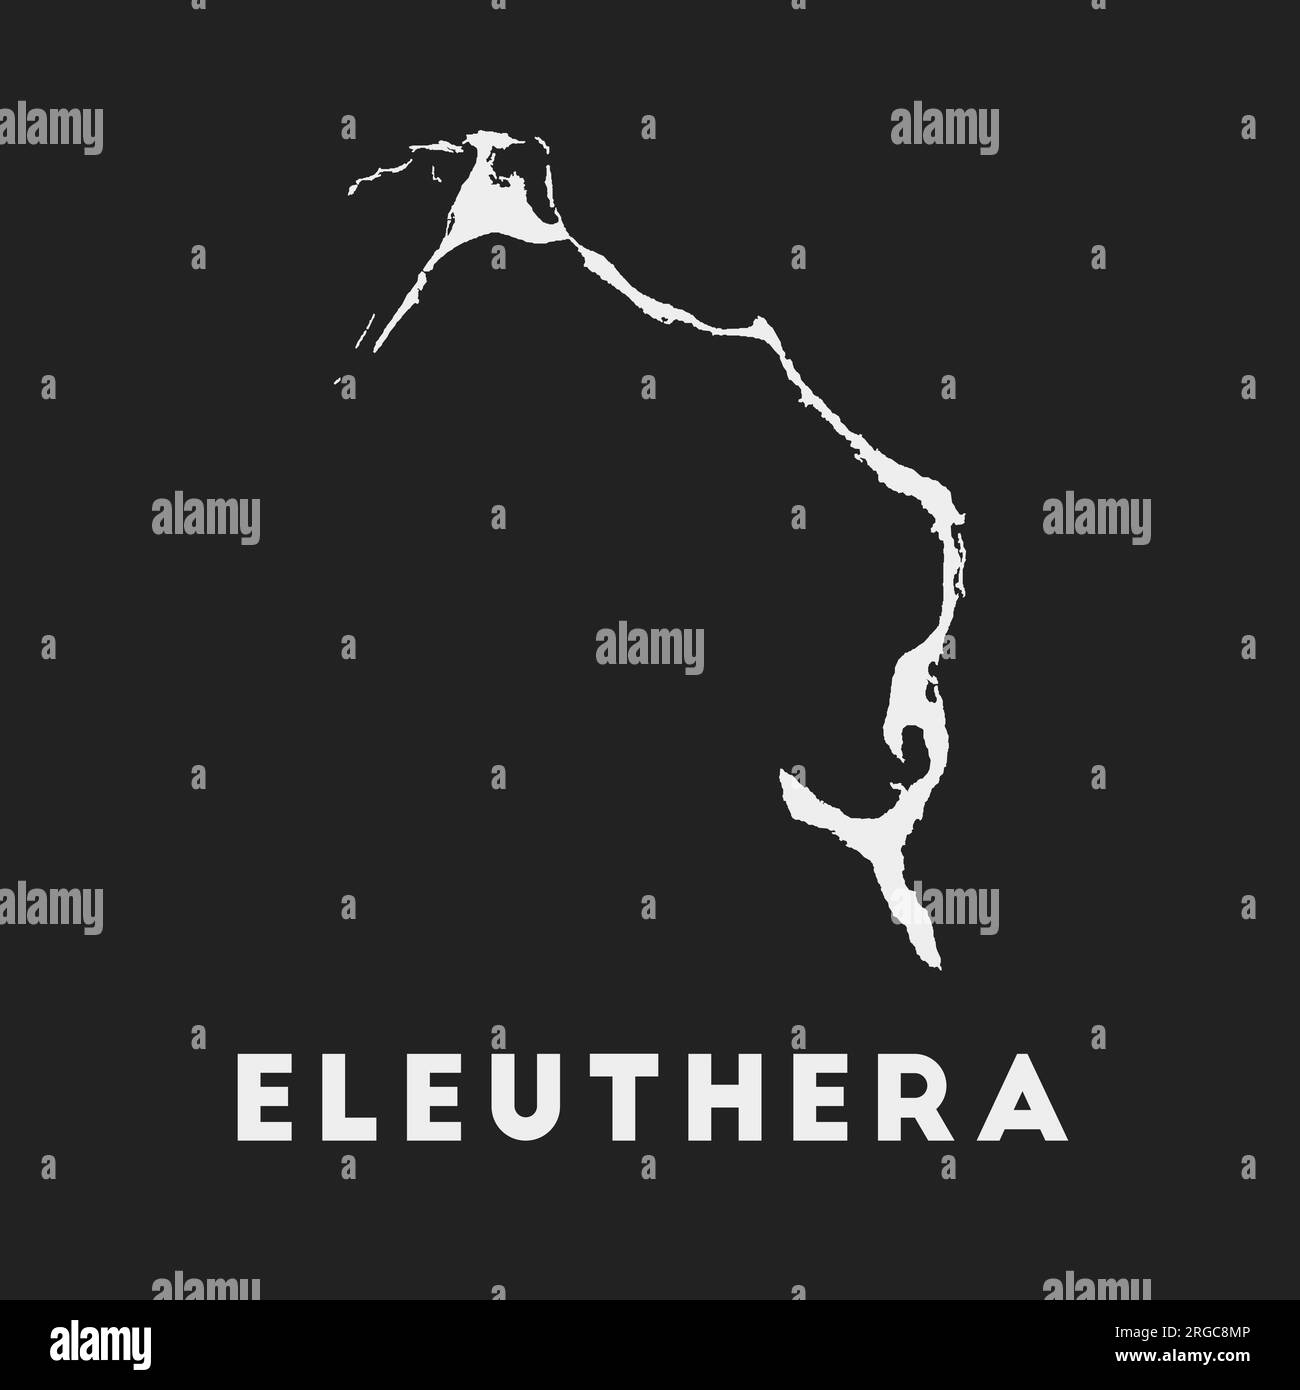 Eleuthera icon. Island map on dark background. Stylish Eleuthera map with island name. Vector illustration. Stock Vector